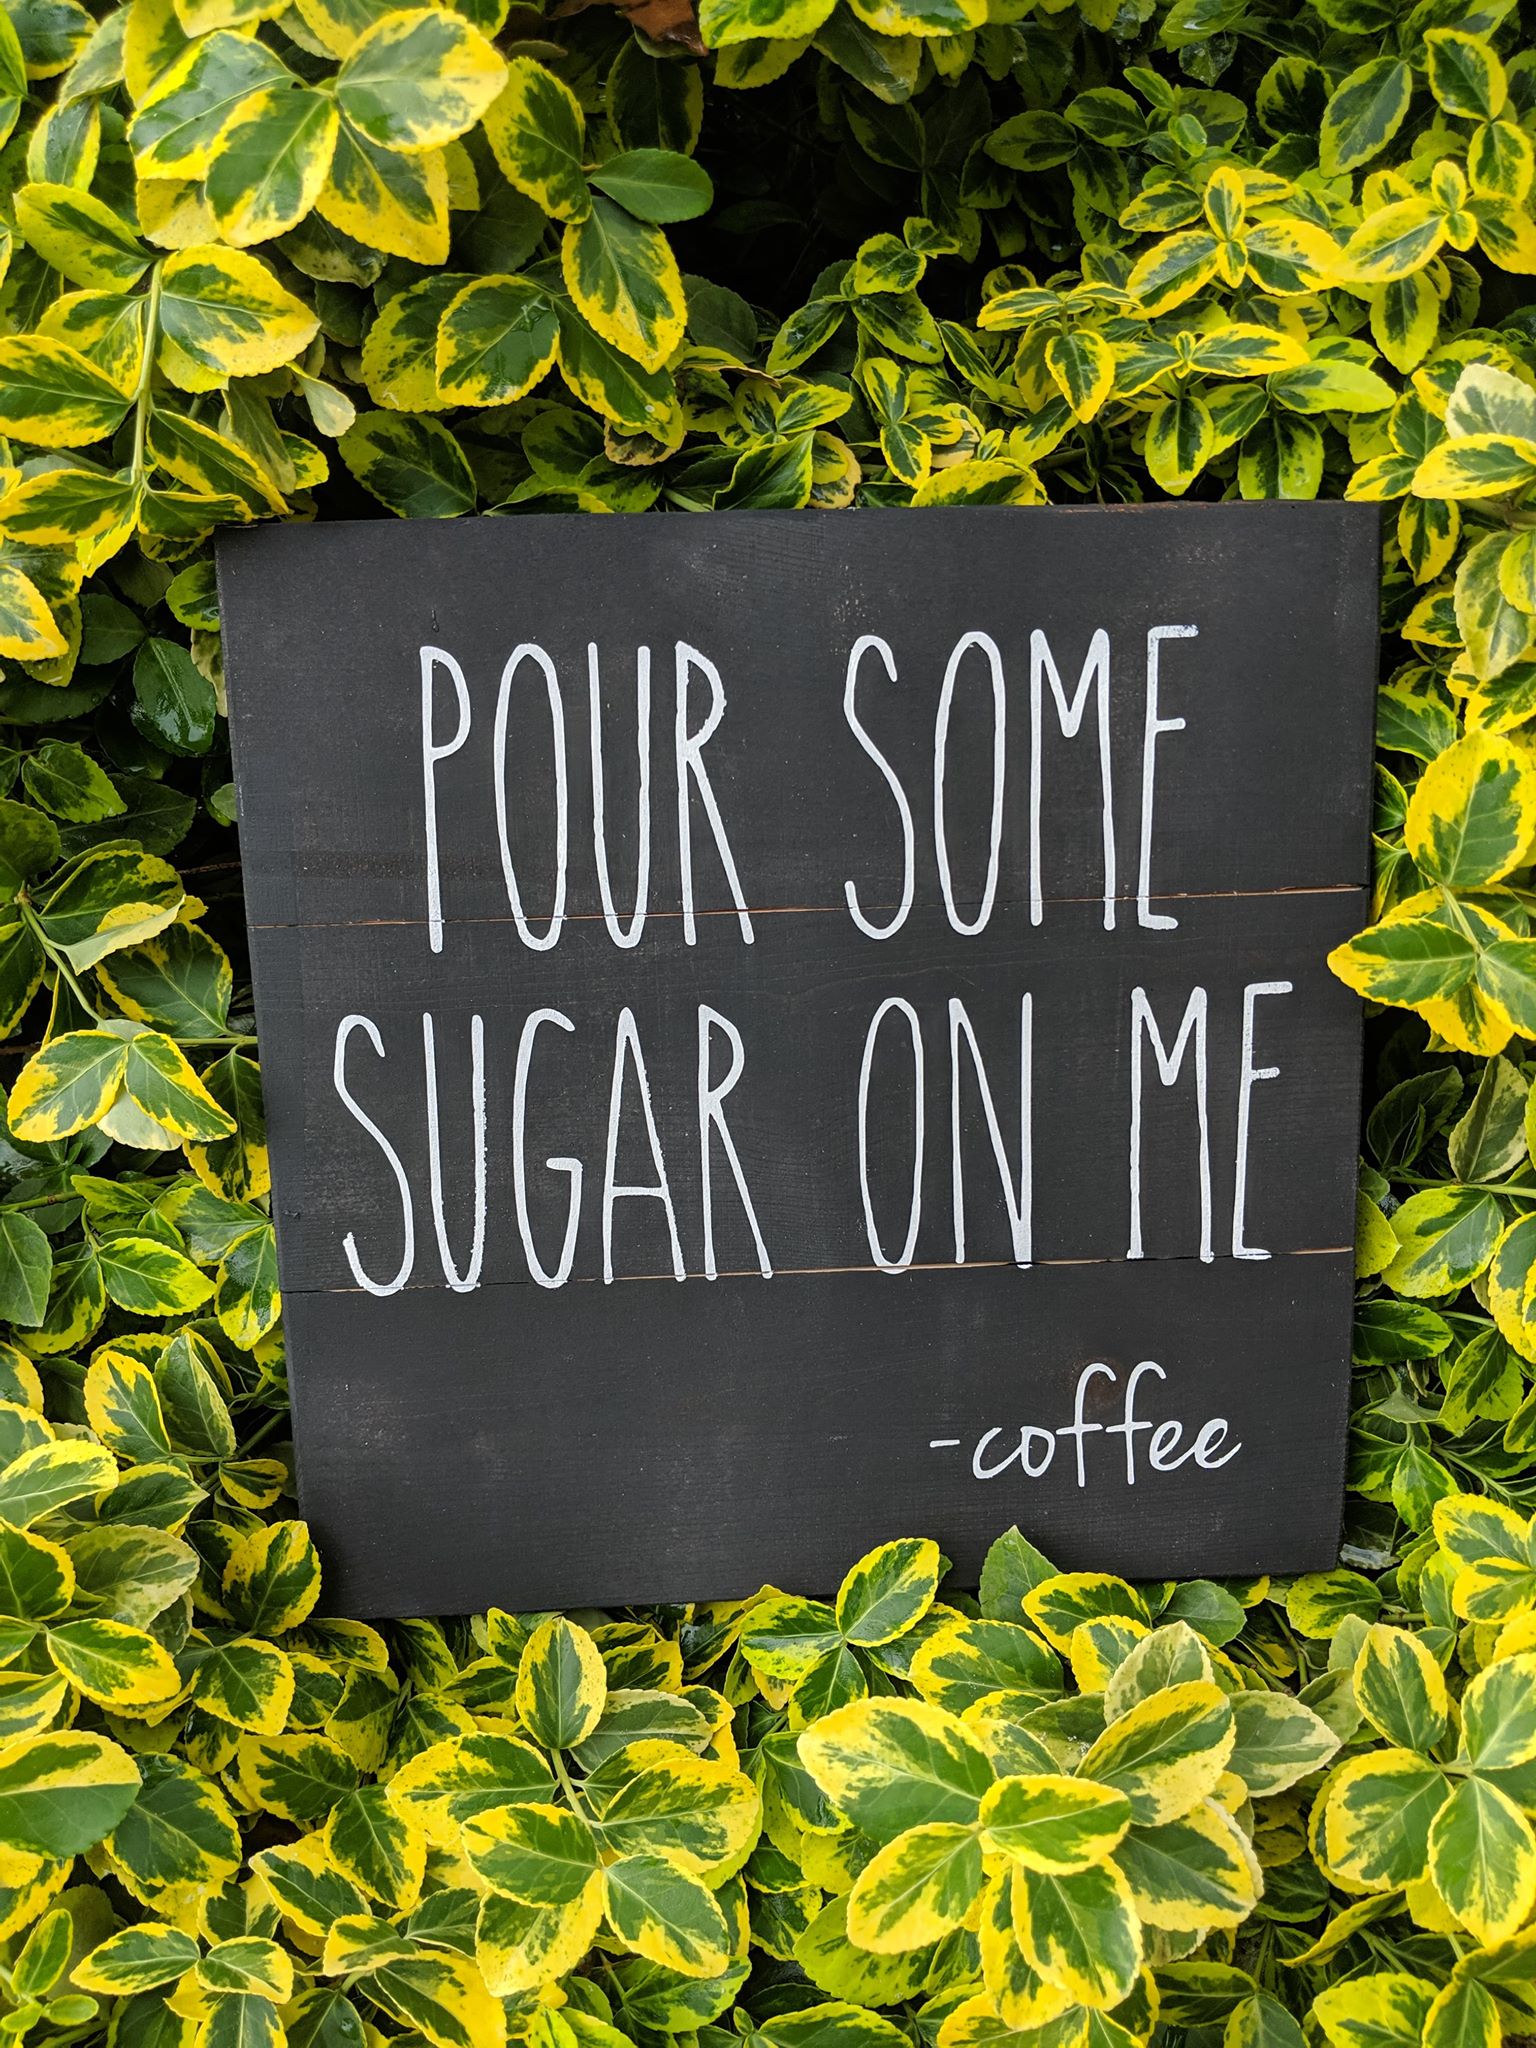 pour some sugar on me - coffee